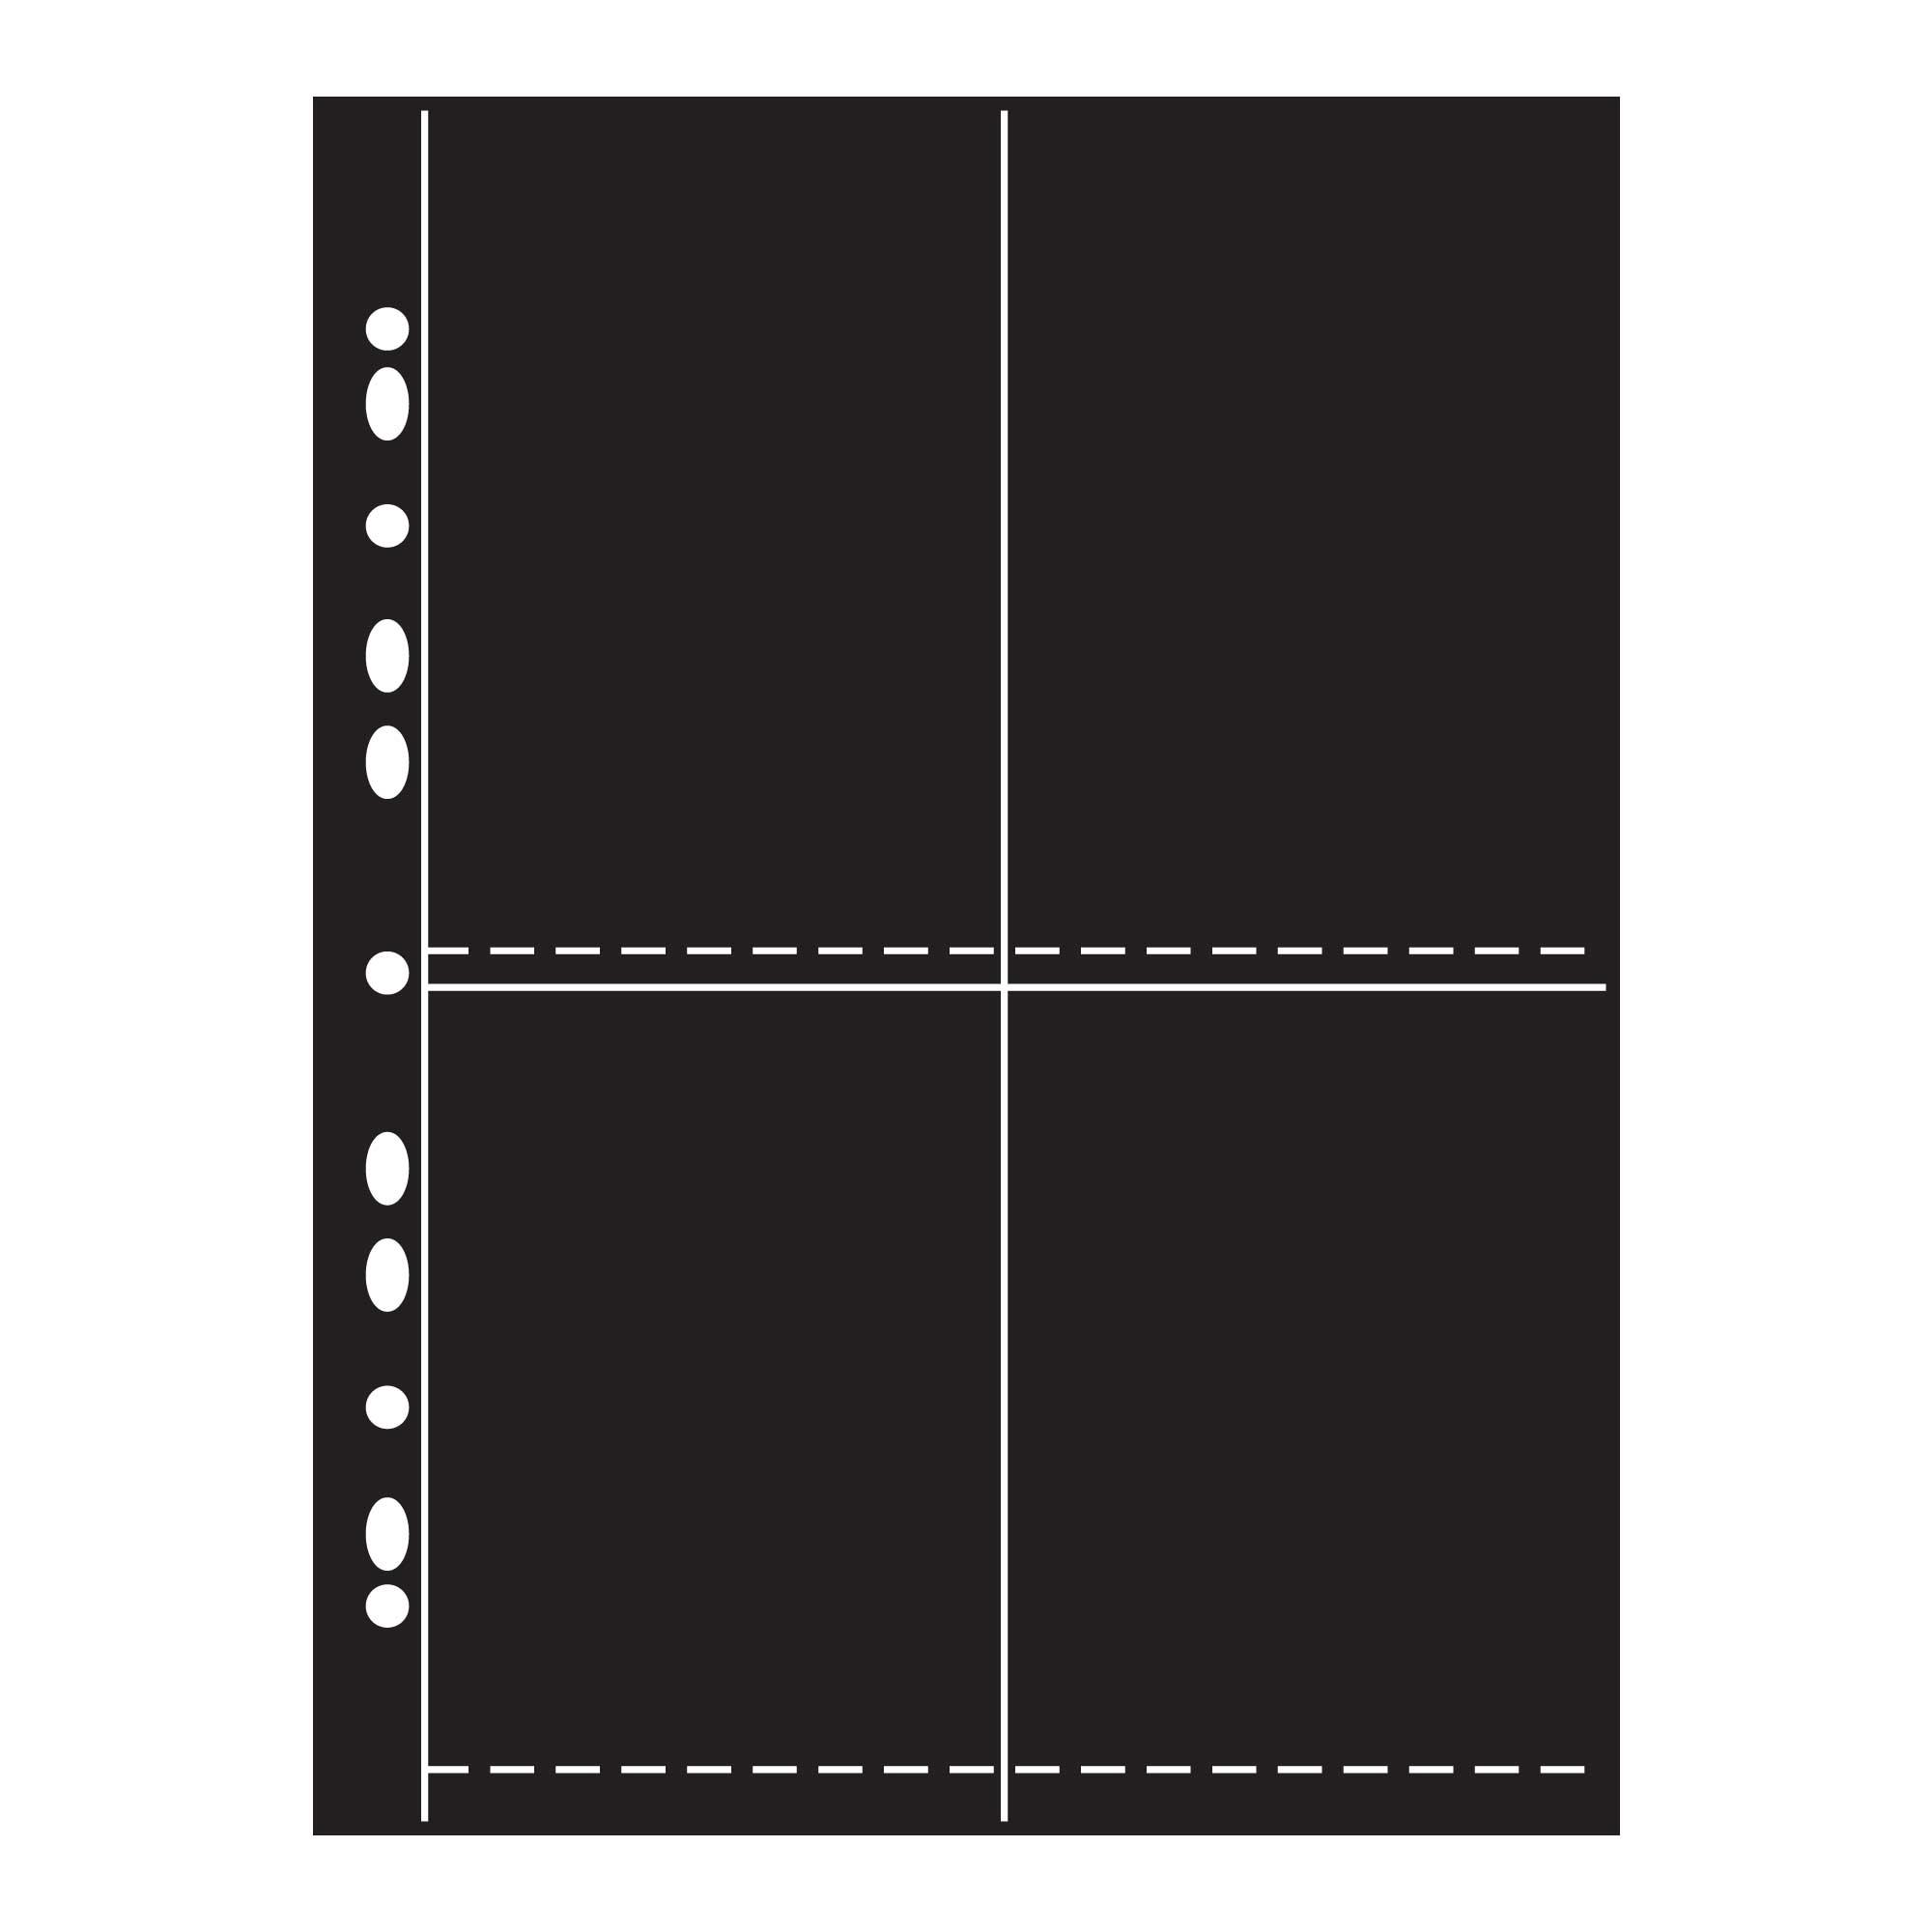 Arrowfile 6 x 4, 150x100mm (4 Pocket) Acid-Free Pocket Refills - Black (Pack of 10)